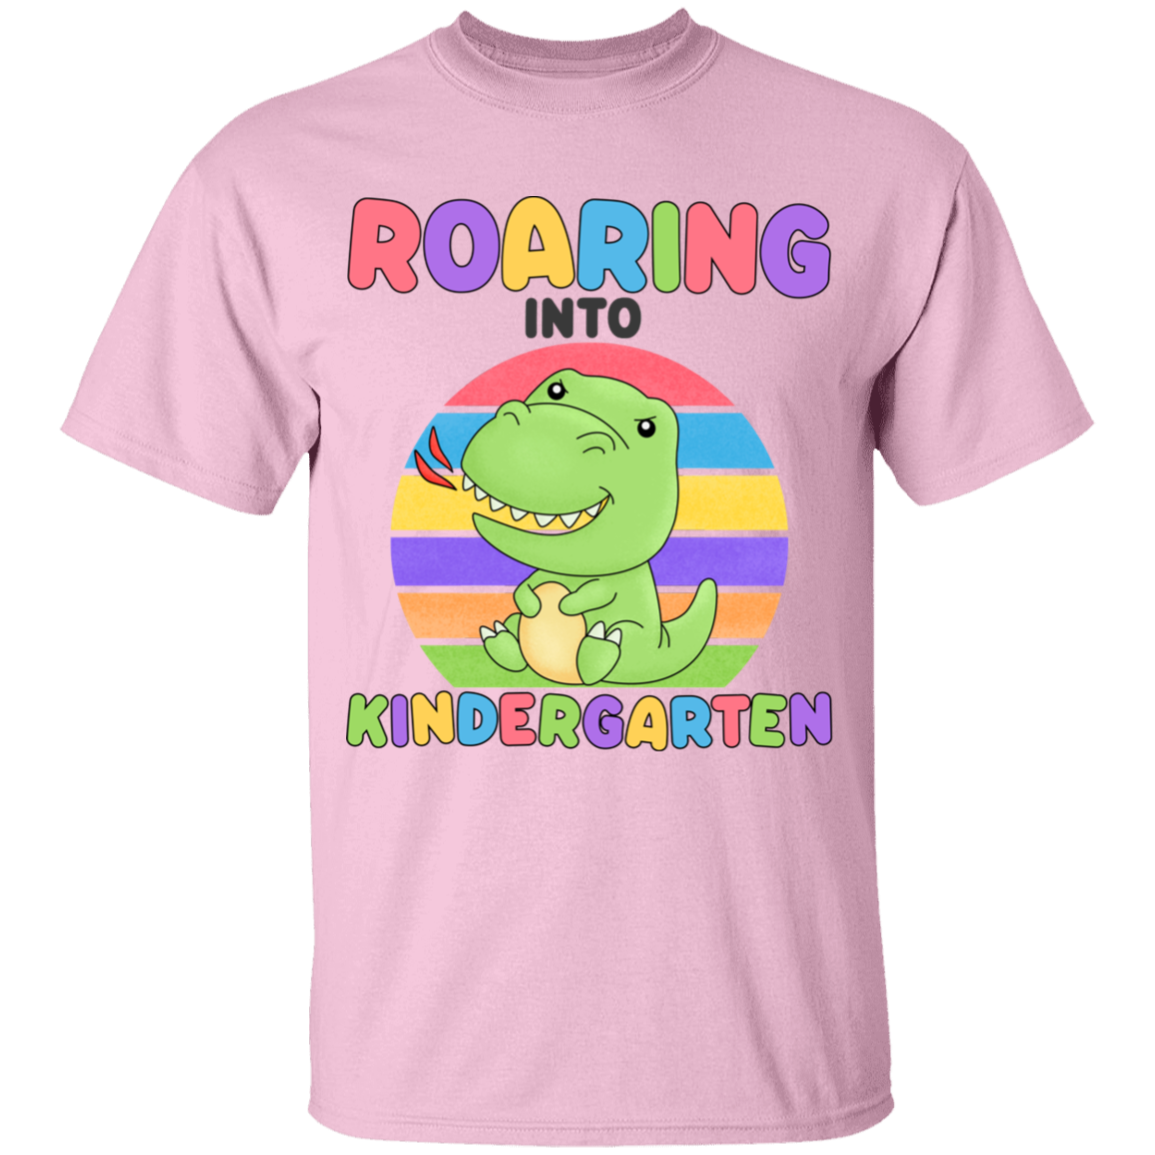 Roaring Into Kindergarten Youth Cotton T-Shirt